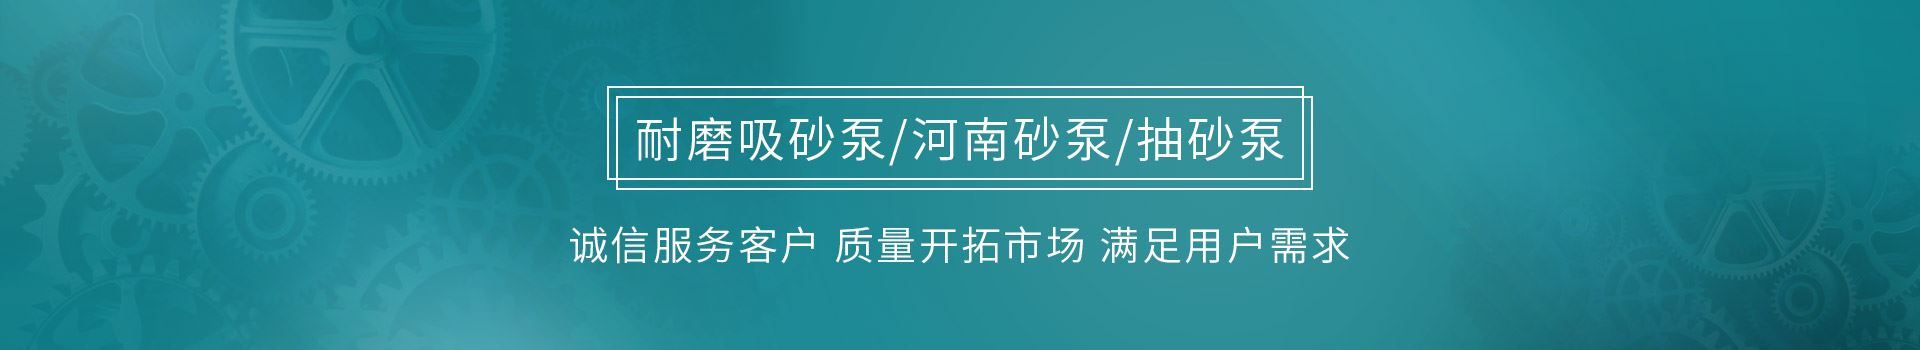 k8凯发(中国)app官方网站_image9994